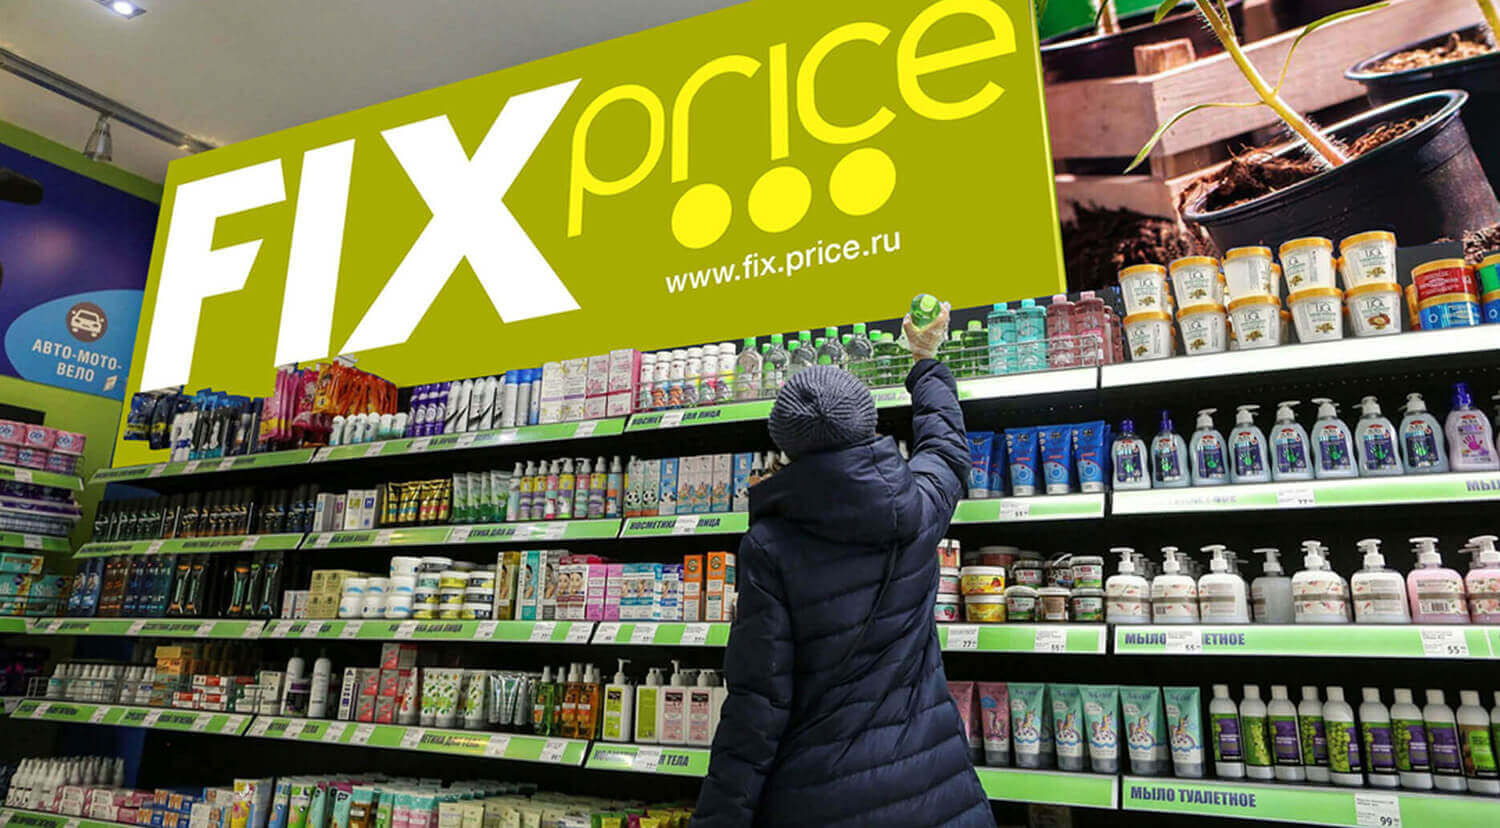 Fix Price Russia, Retail Branding, Store Interior Design and Graphic Communications